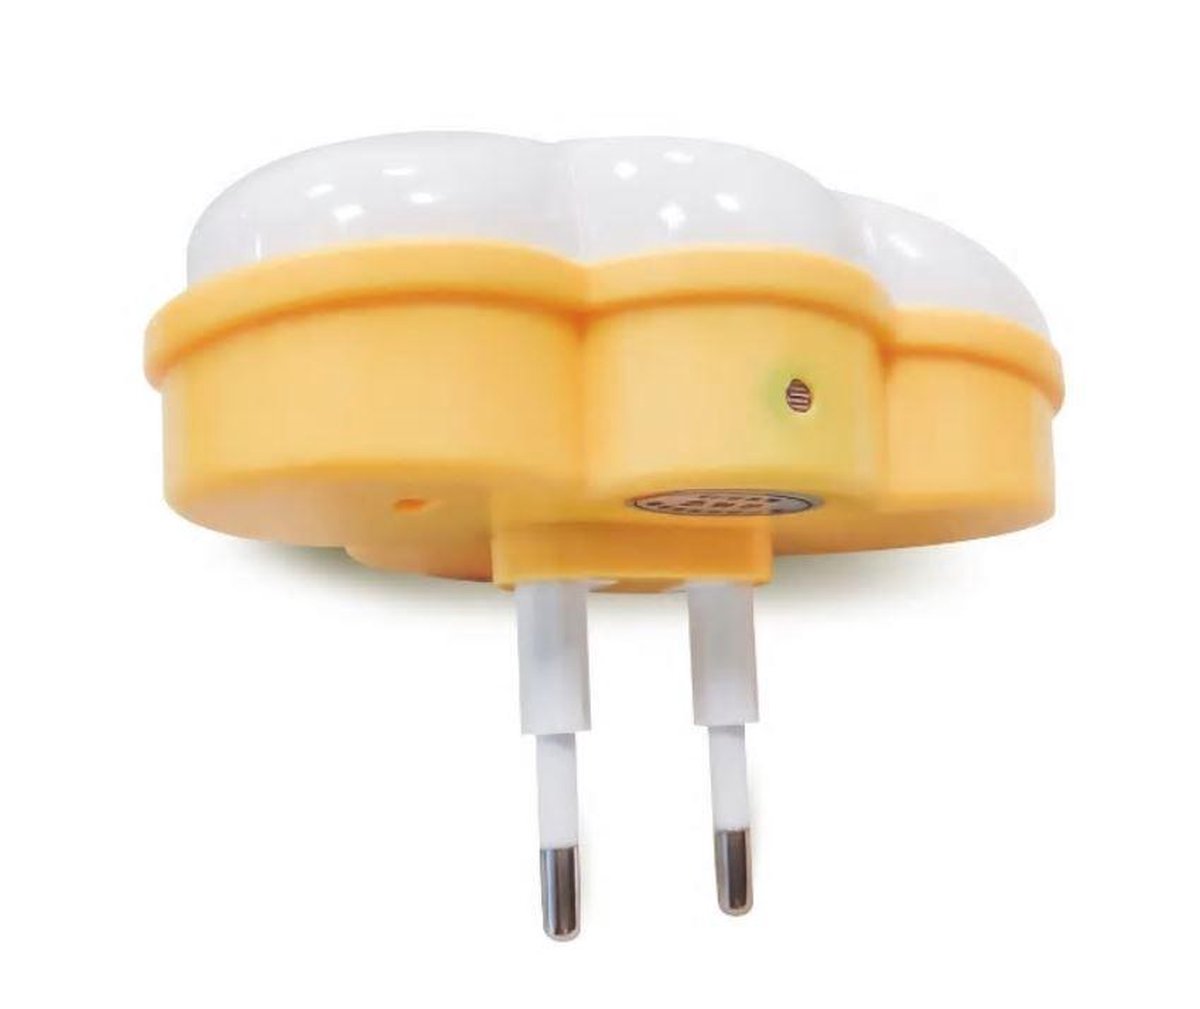 Markeer Nest ticket led lamp Wolk geel stopcontact lamp met sensor - nachtlampje | bol.com